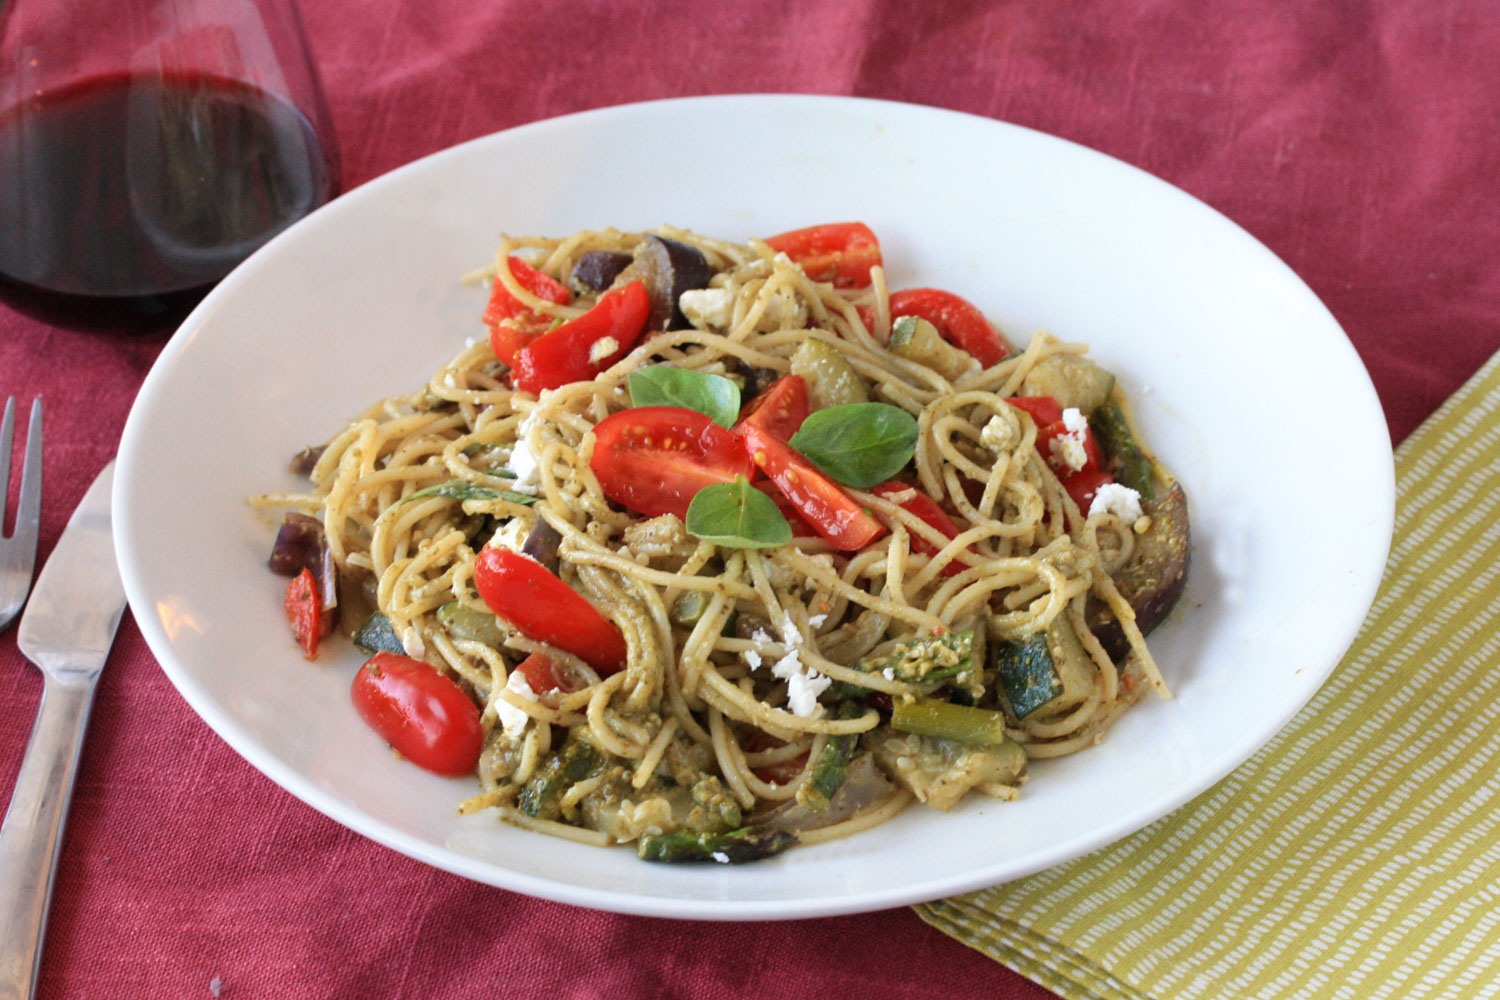 Roast vegetable spaghetti with basil pesto and cherry tomatoes